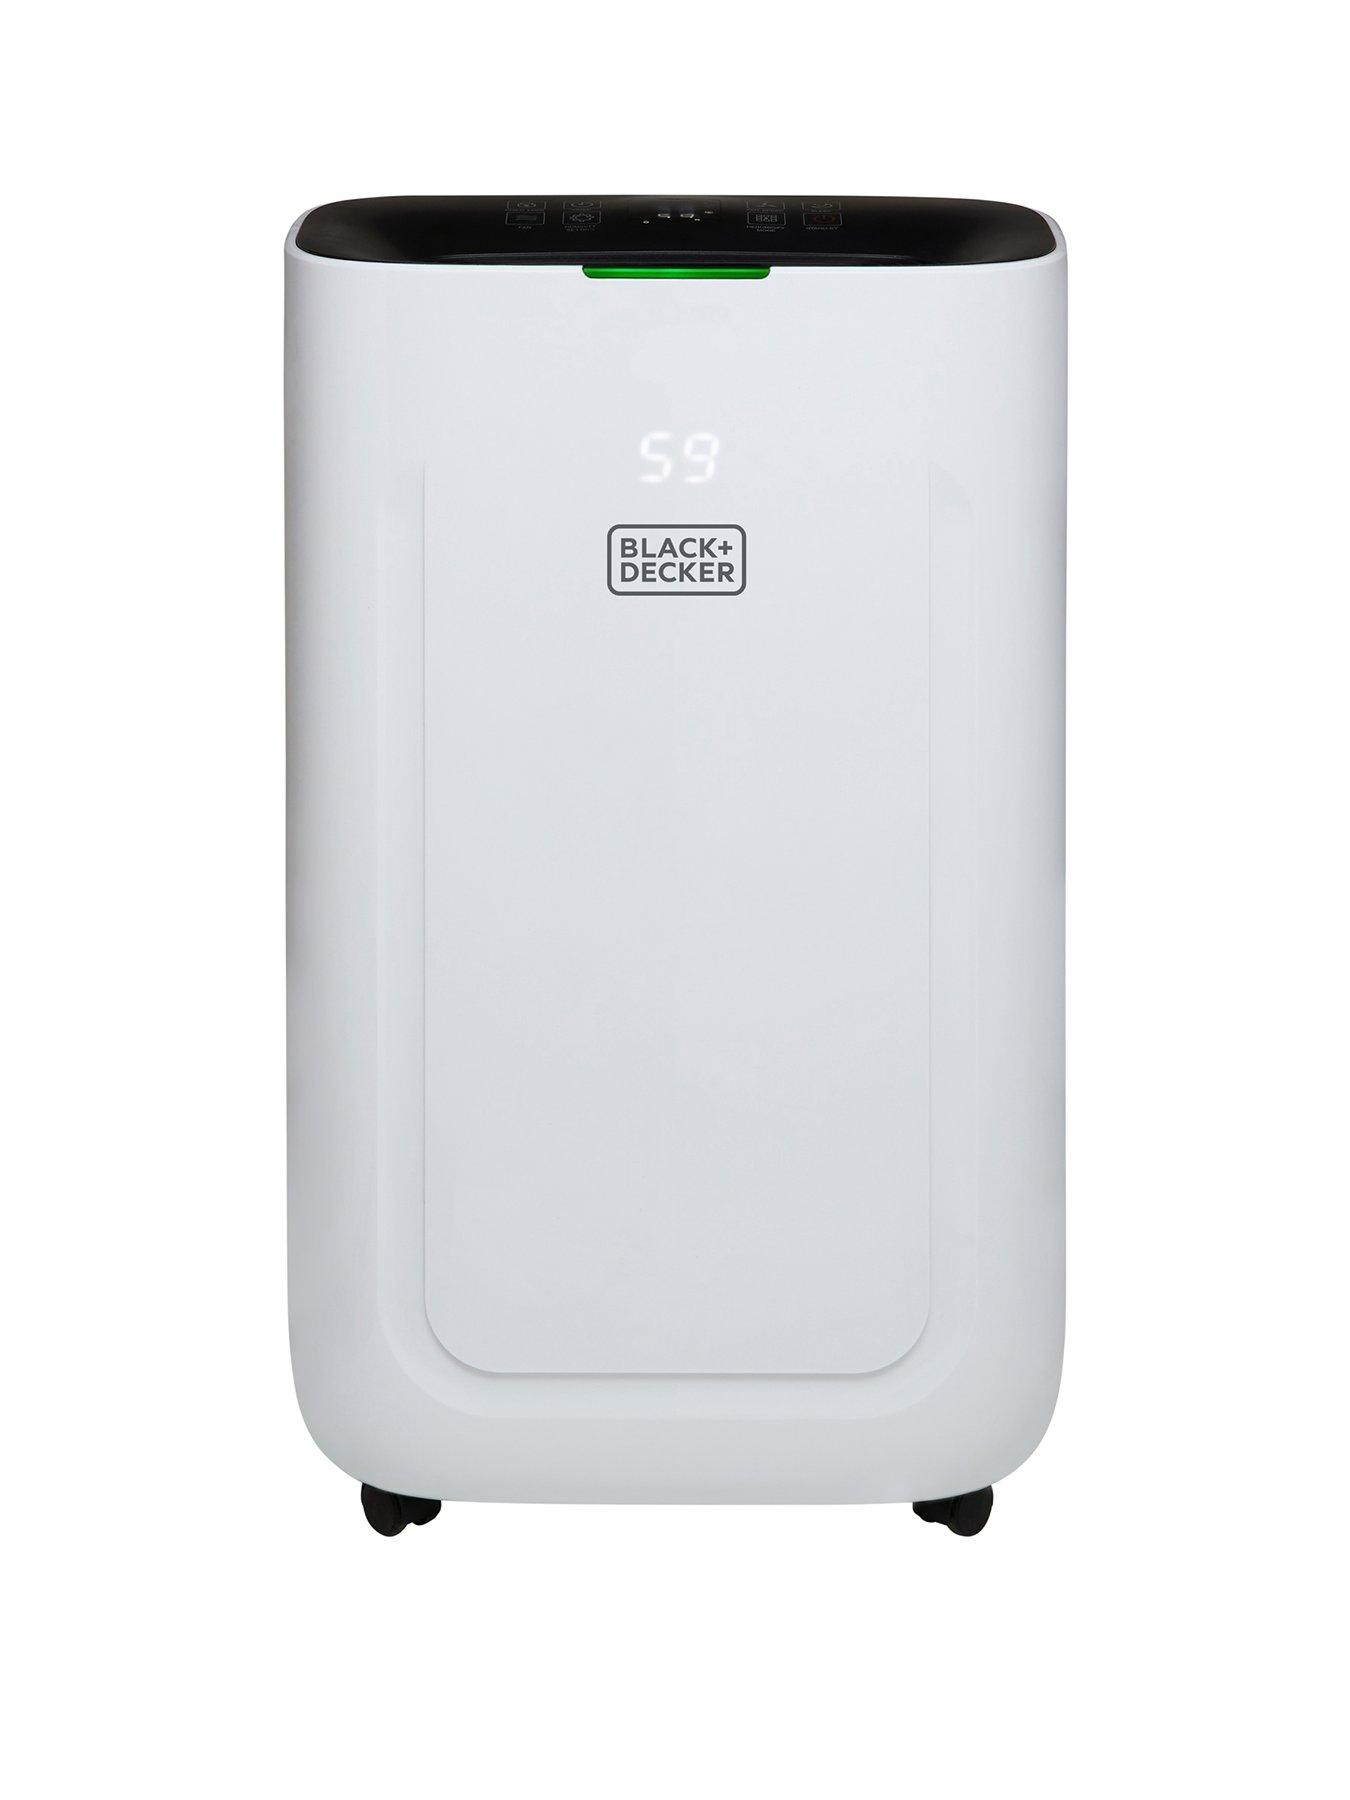 Black & Decker Bxeh60014Gb 20L Smart Dehumidifier, 4 Modes, Quiet, 6.5L Water Tank, 24 Hour Timer, White